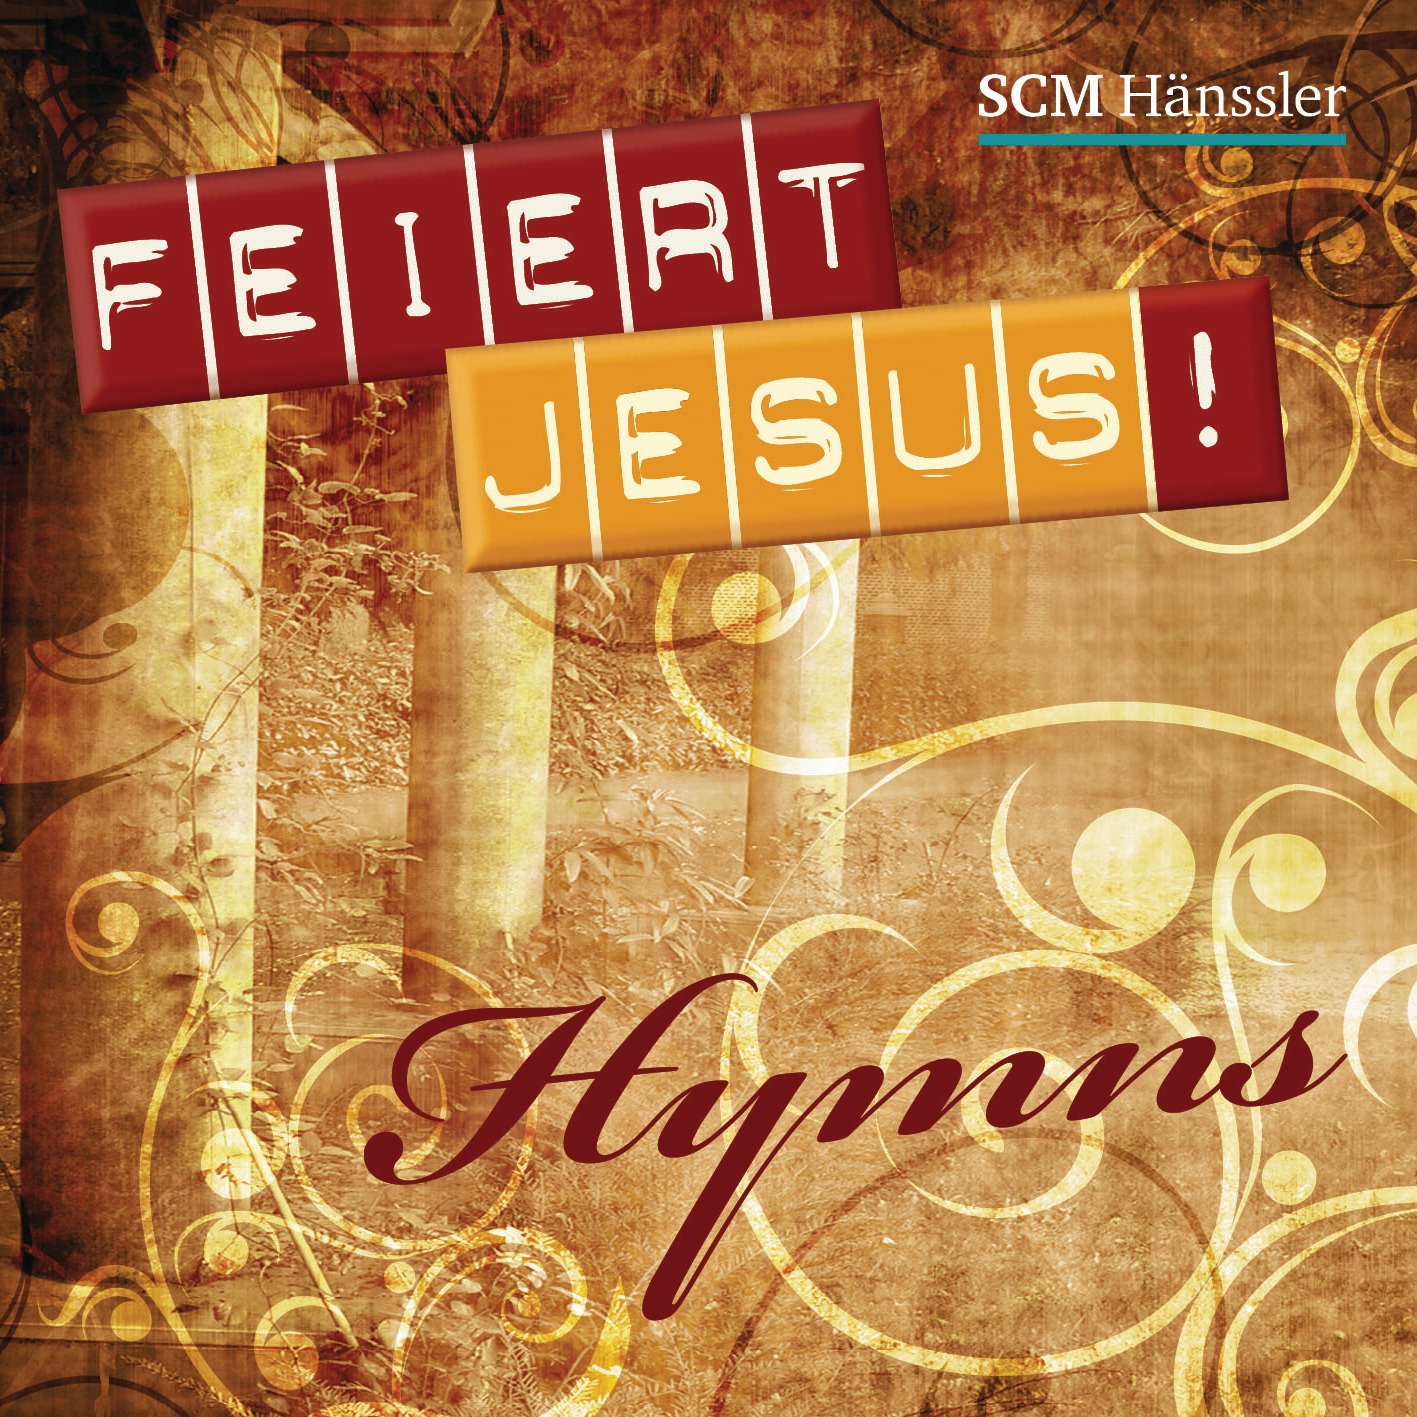 Feiert Jesus! Hymns (Audio - CD) - SCM Shop.de